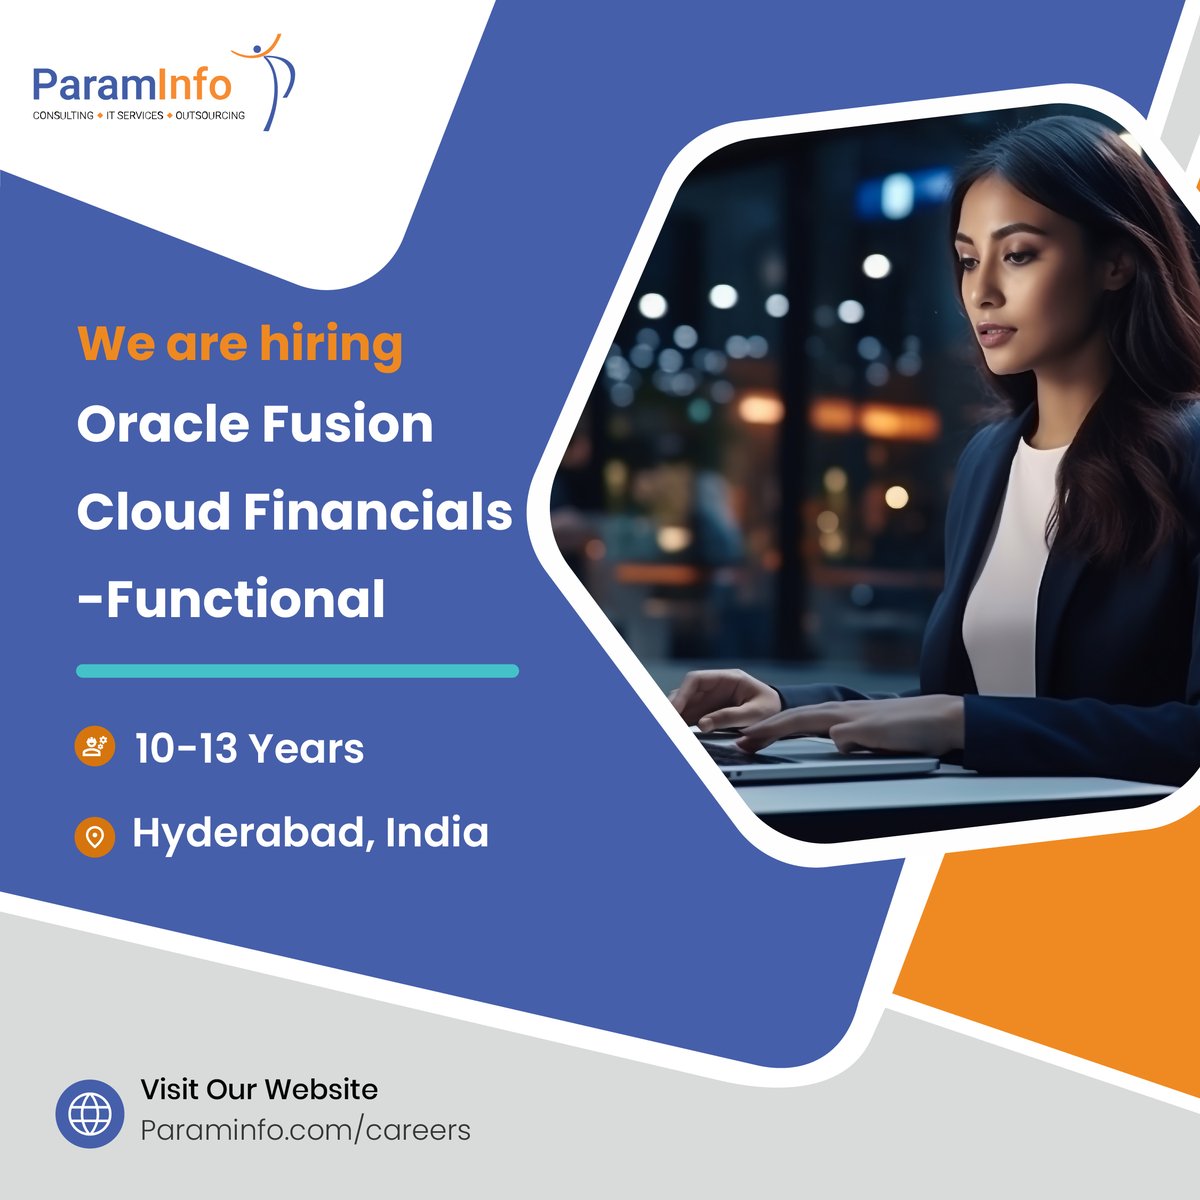 𝐉𝐨𝐛 𝐓𝐢𝐭𝐥𝐞: Oracle Fusion Cloud Financials - Functional 📢
𝐀𝐩𝐩𝐥𝐲 𝐍𝐨𝐰: bit.ly/3UpsndB 👈
𝐄𝐱𝐩𝐞𝐫𝐢𝐞𝐧𝐜𝐞: 10 - 13 Years
𝐋𝐨𝐜𝐚𝐭𝐢𝐨𝐧: Hyderabad, India

#career #itsoftware #it #oracle #cloudfinancials #oracleebs #fbdi #oci #oum #r12 #ERPcloud #EBS